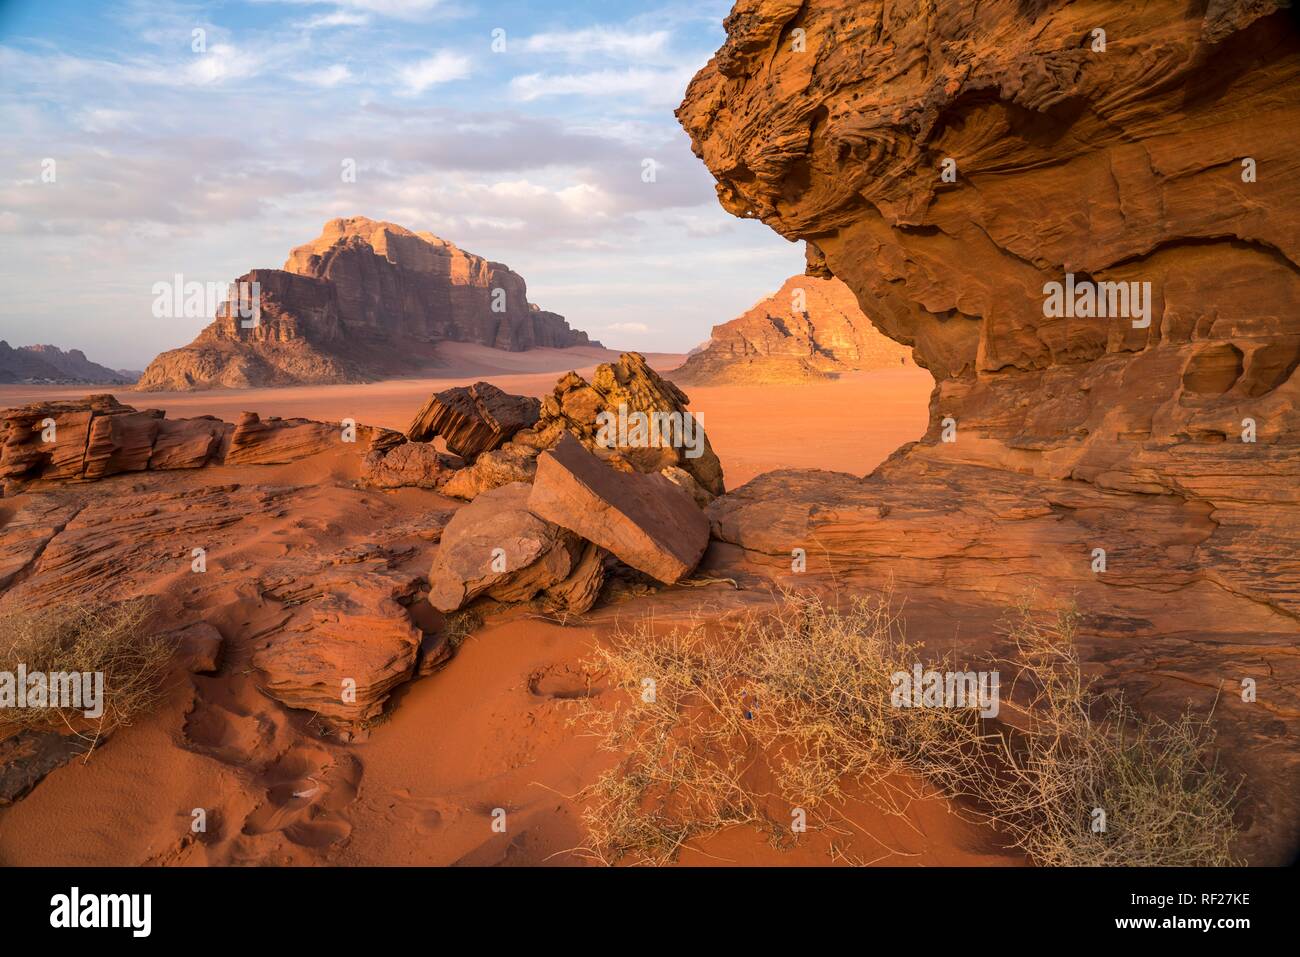 Landscape with rocks in the desert Wadi Rum, Jordan Stock Photo